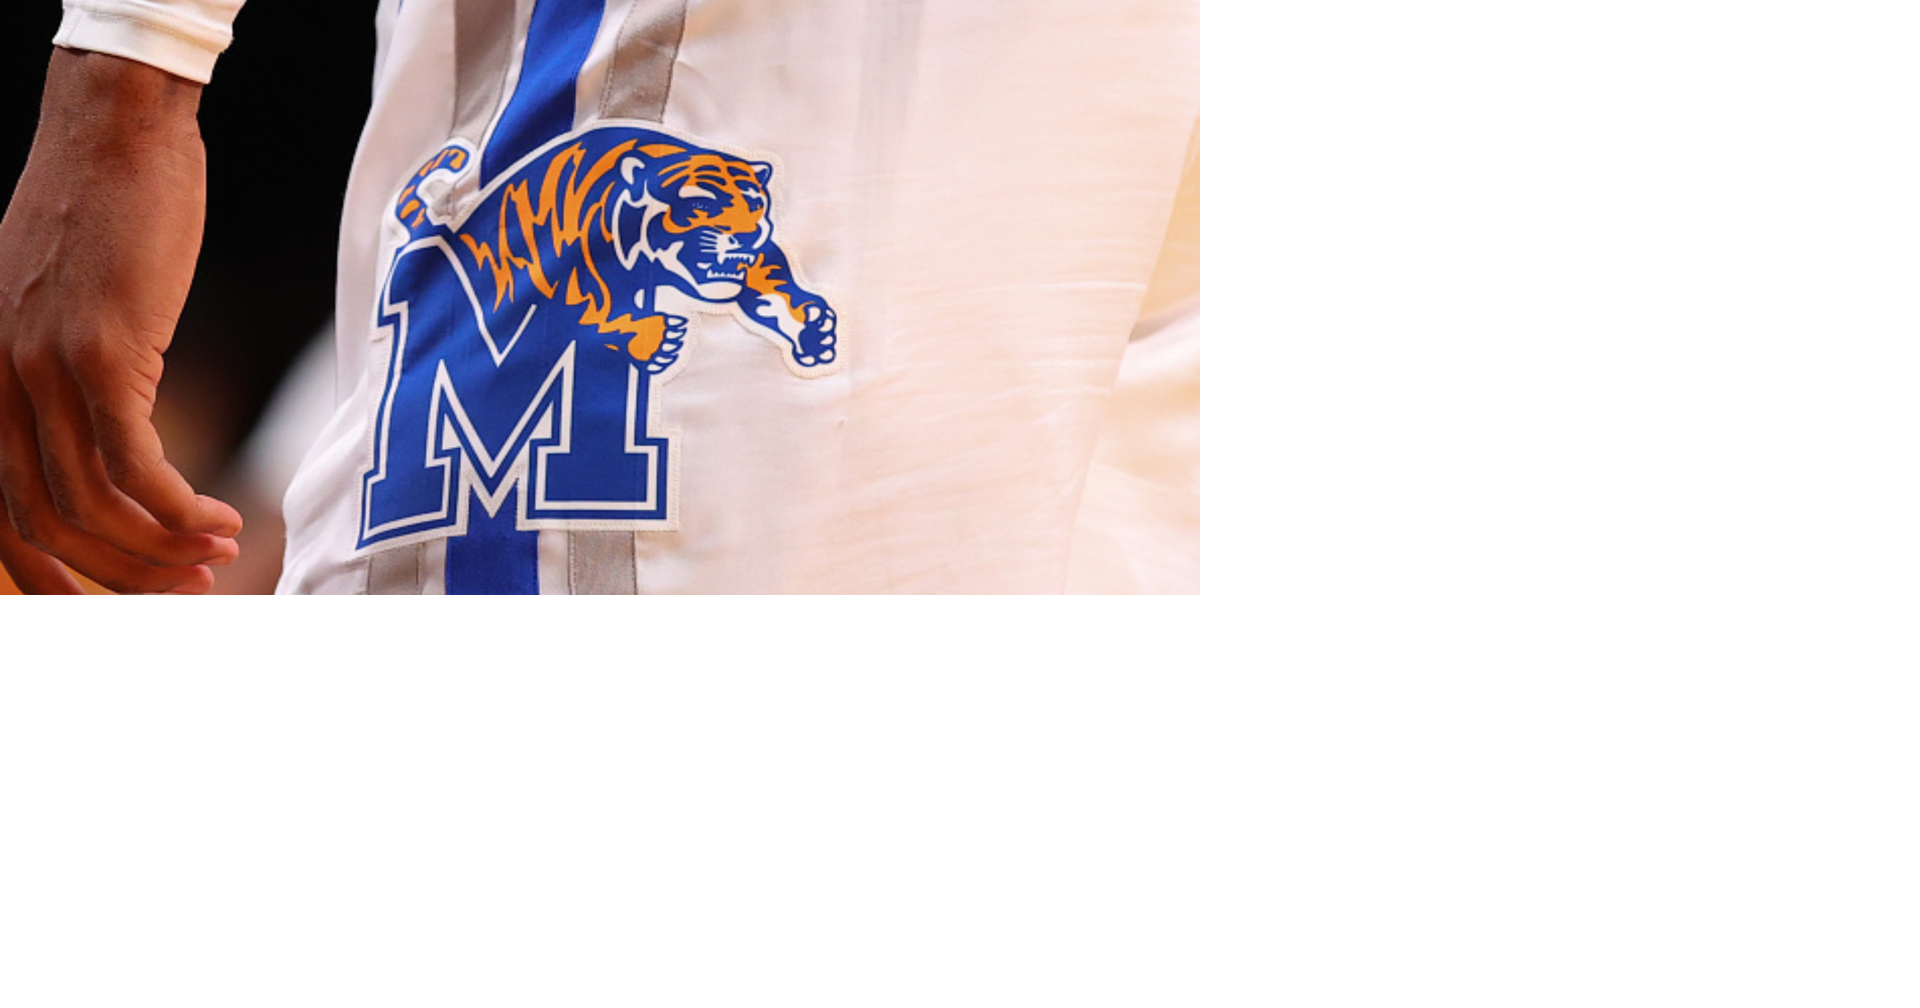 Memphis Tigers basketball team jumps 4 spots in latest poll, News